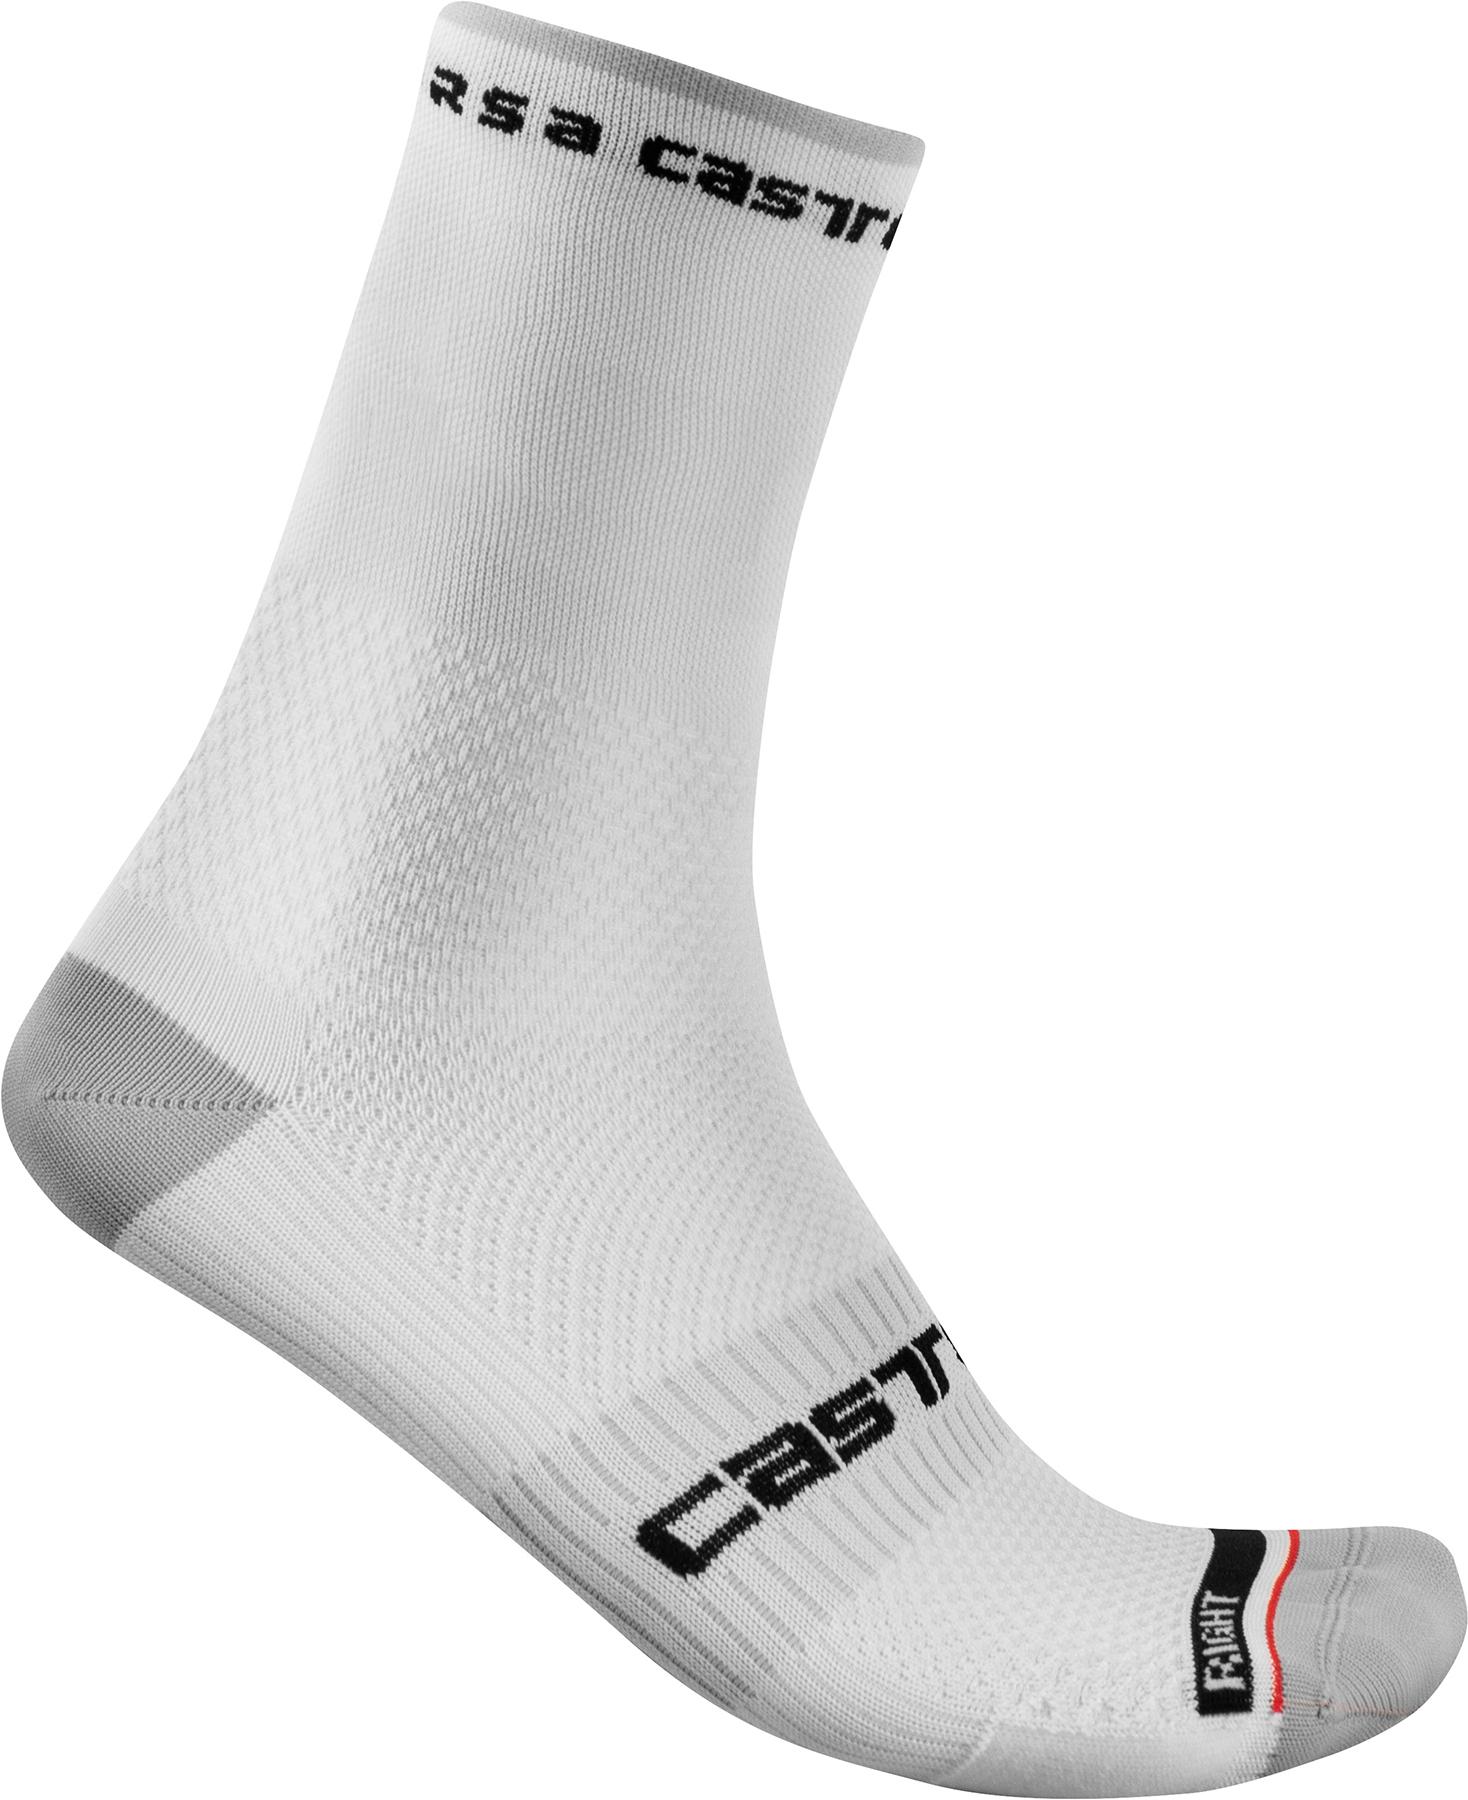 Castelli Rosso Corsa Pro 15 Socks  White